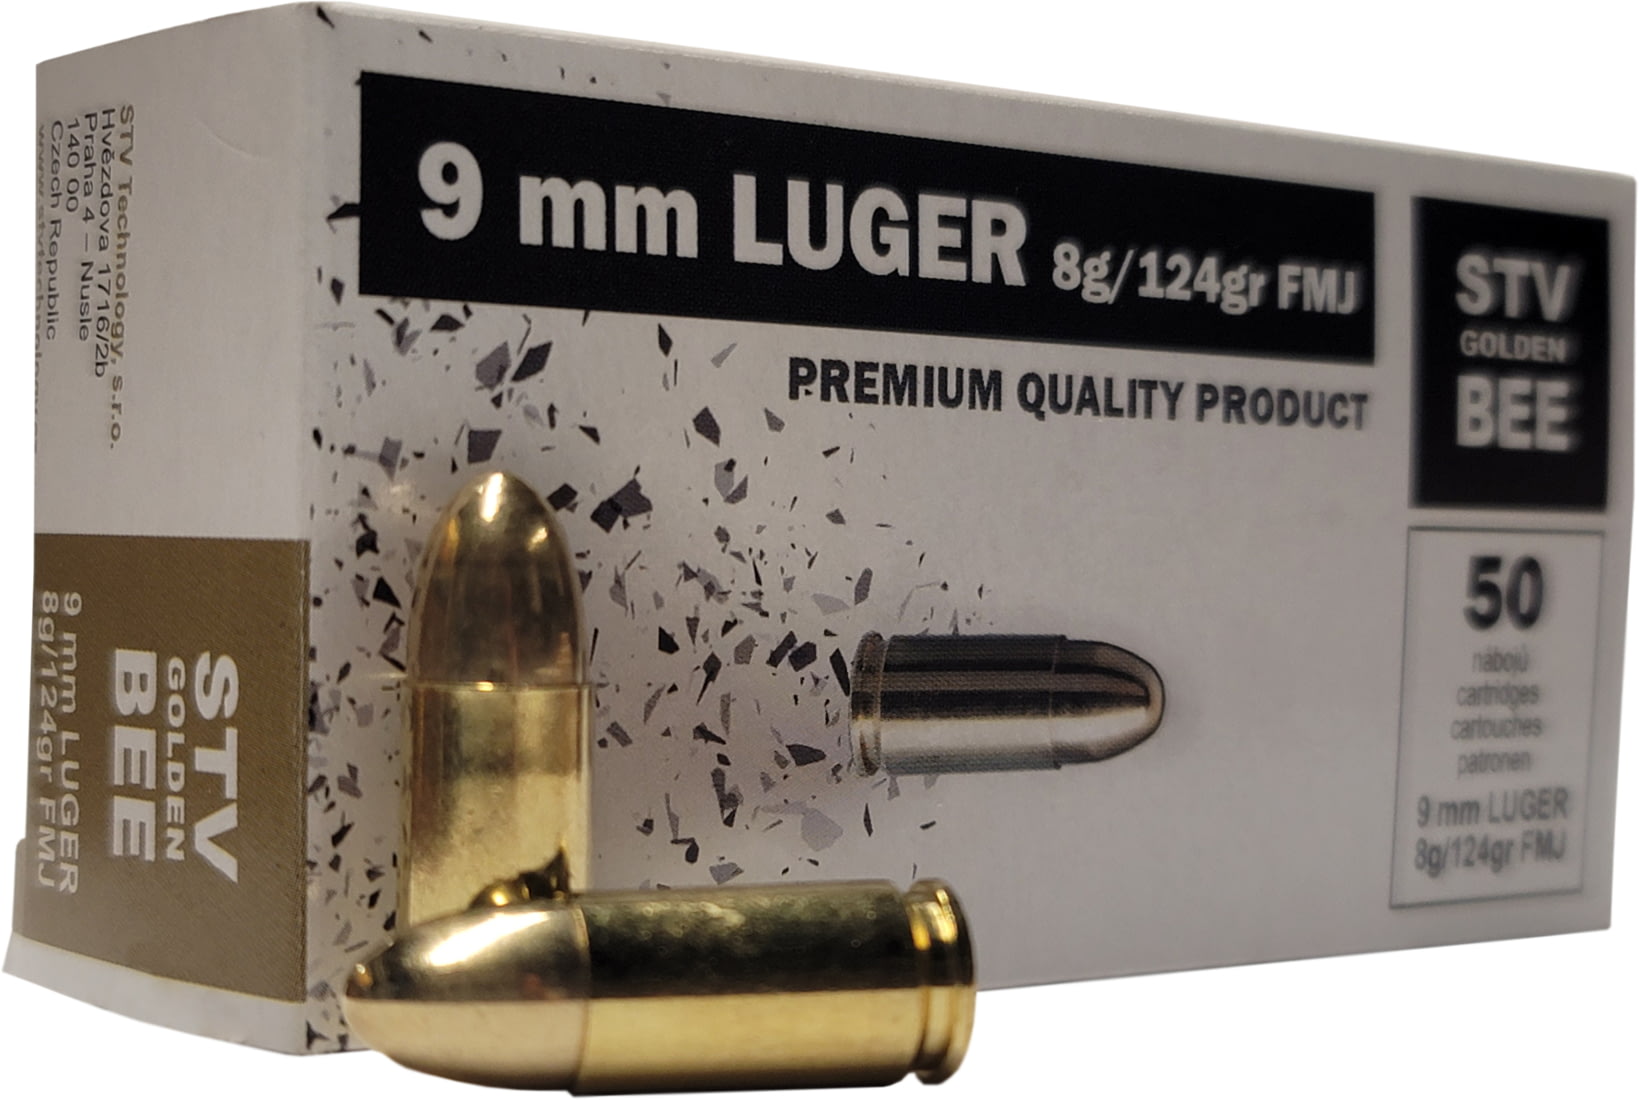 opplanet stv golden bee 9mm luger 124 grain full metal jacket brass cased centerfite pistol ammo 50 rounds s9a main